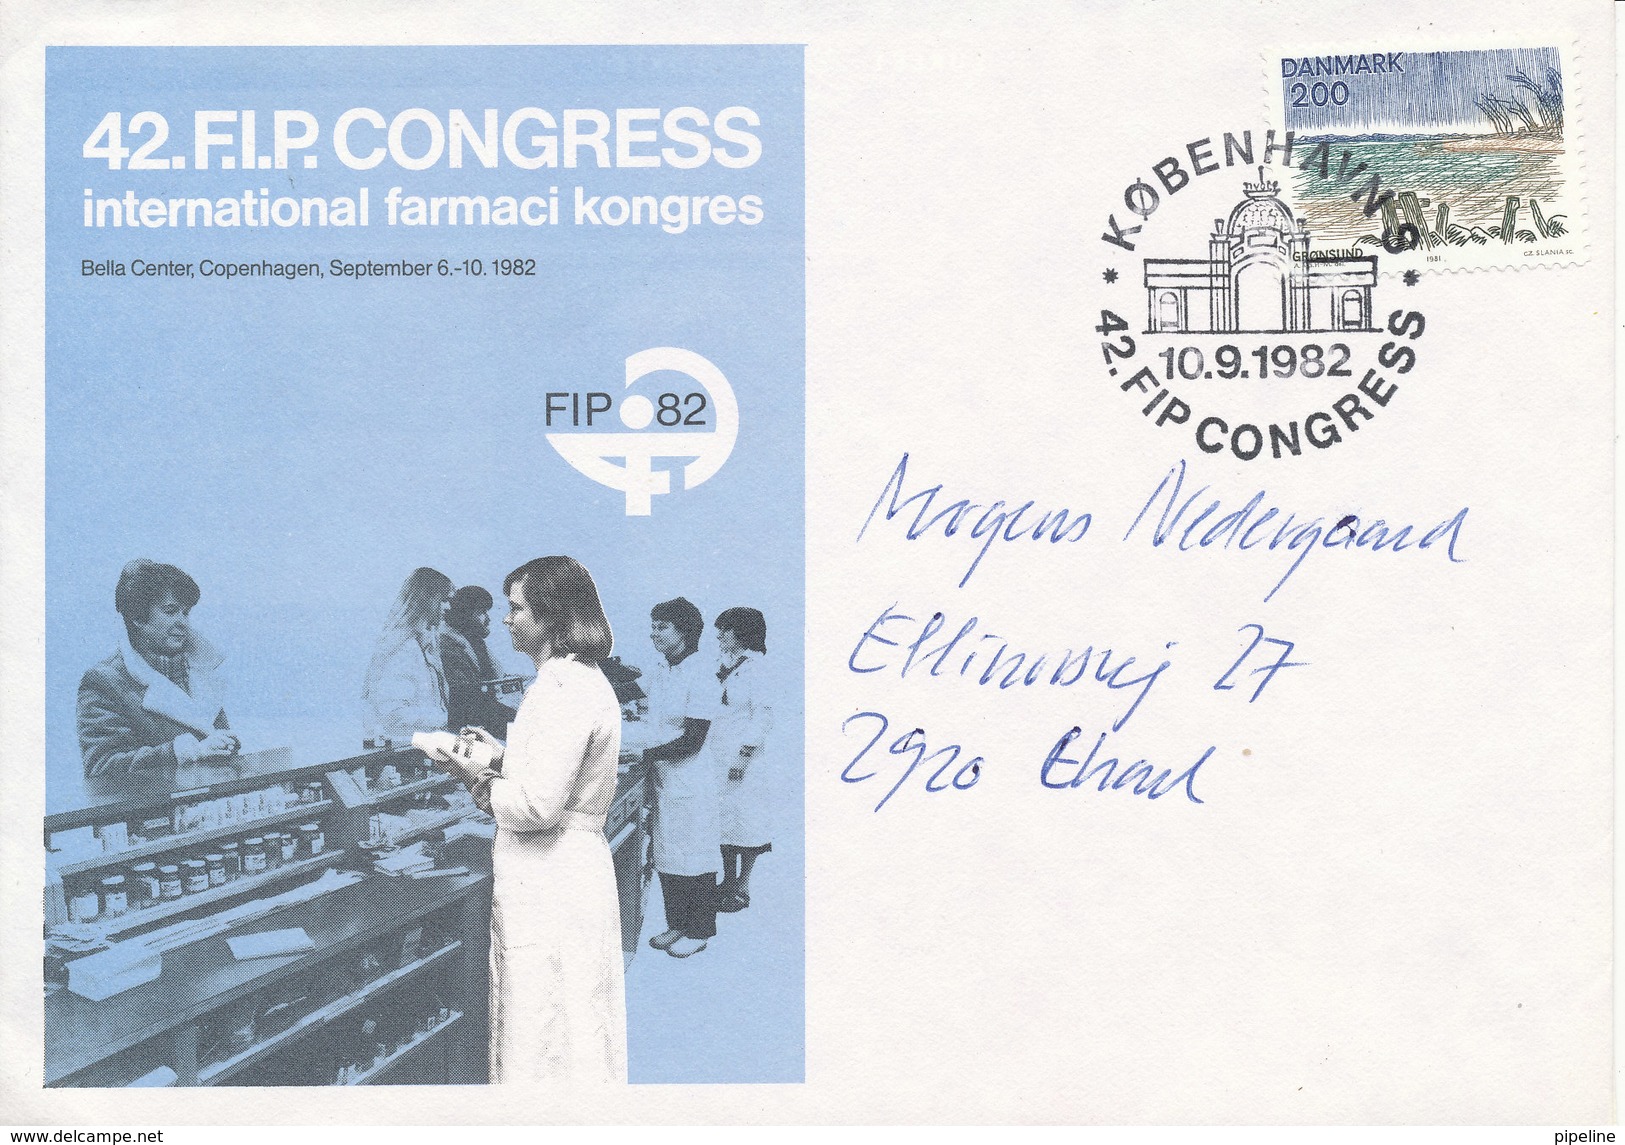 Denmark Cover With Speciel Postmark And Cachet 10-9-1982 42. F.I.P. Congress International Farmaci Congress F.I.P. 82 - Pharmacy